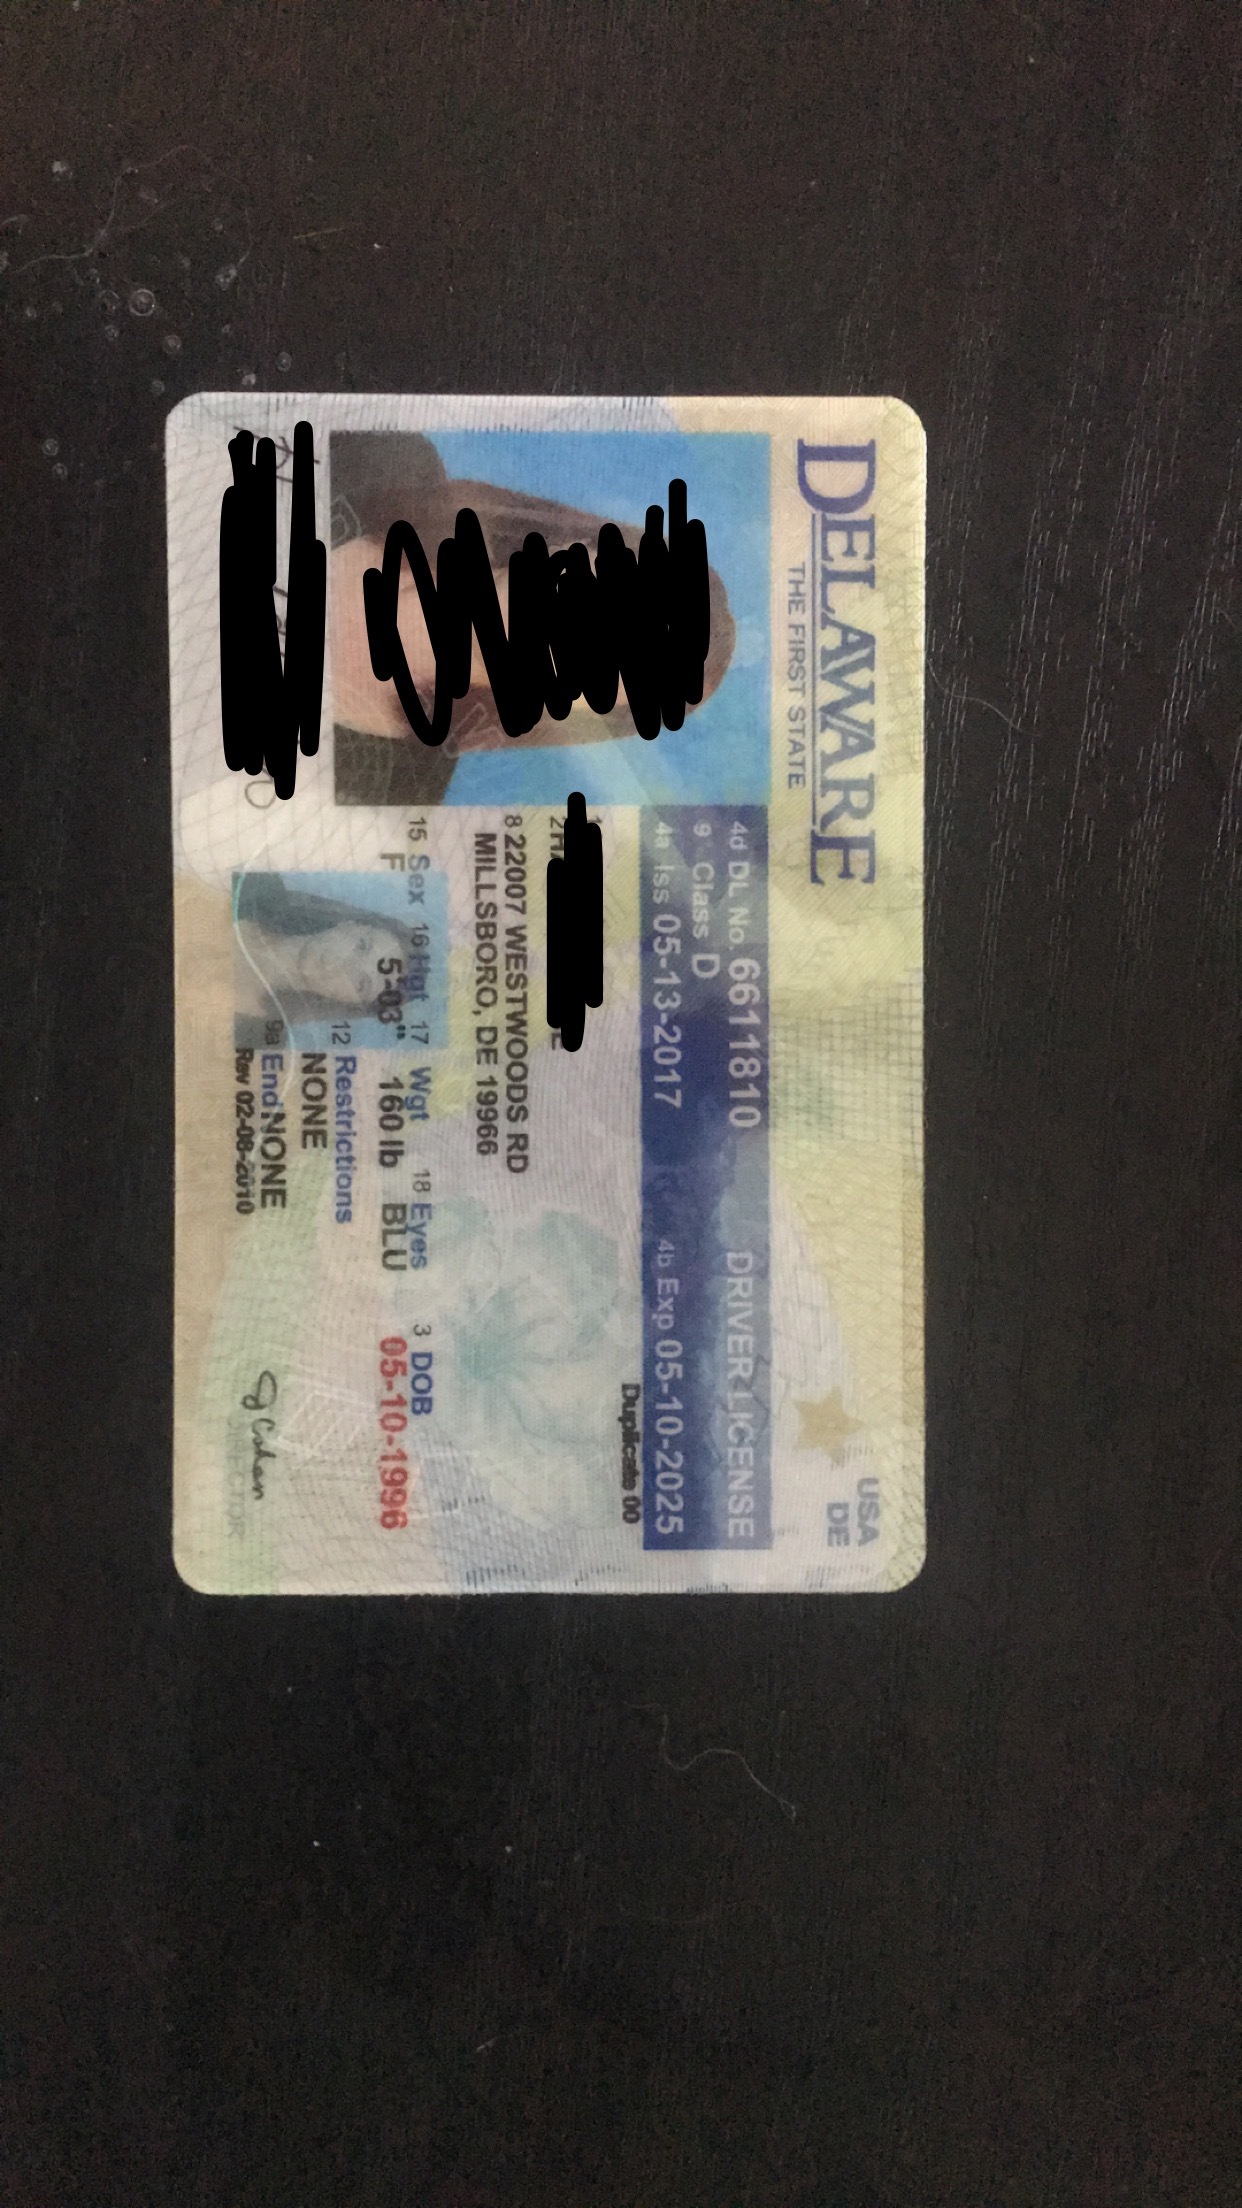 Delaware fake id